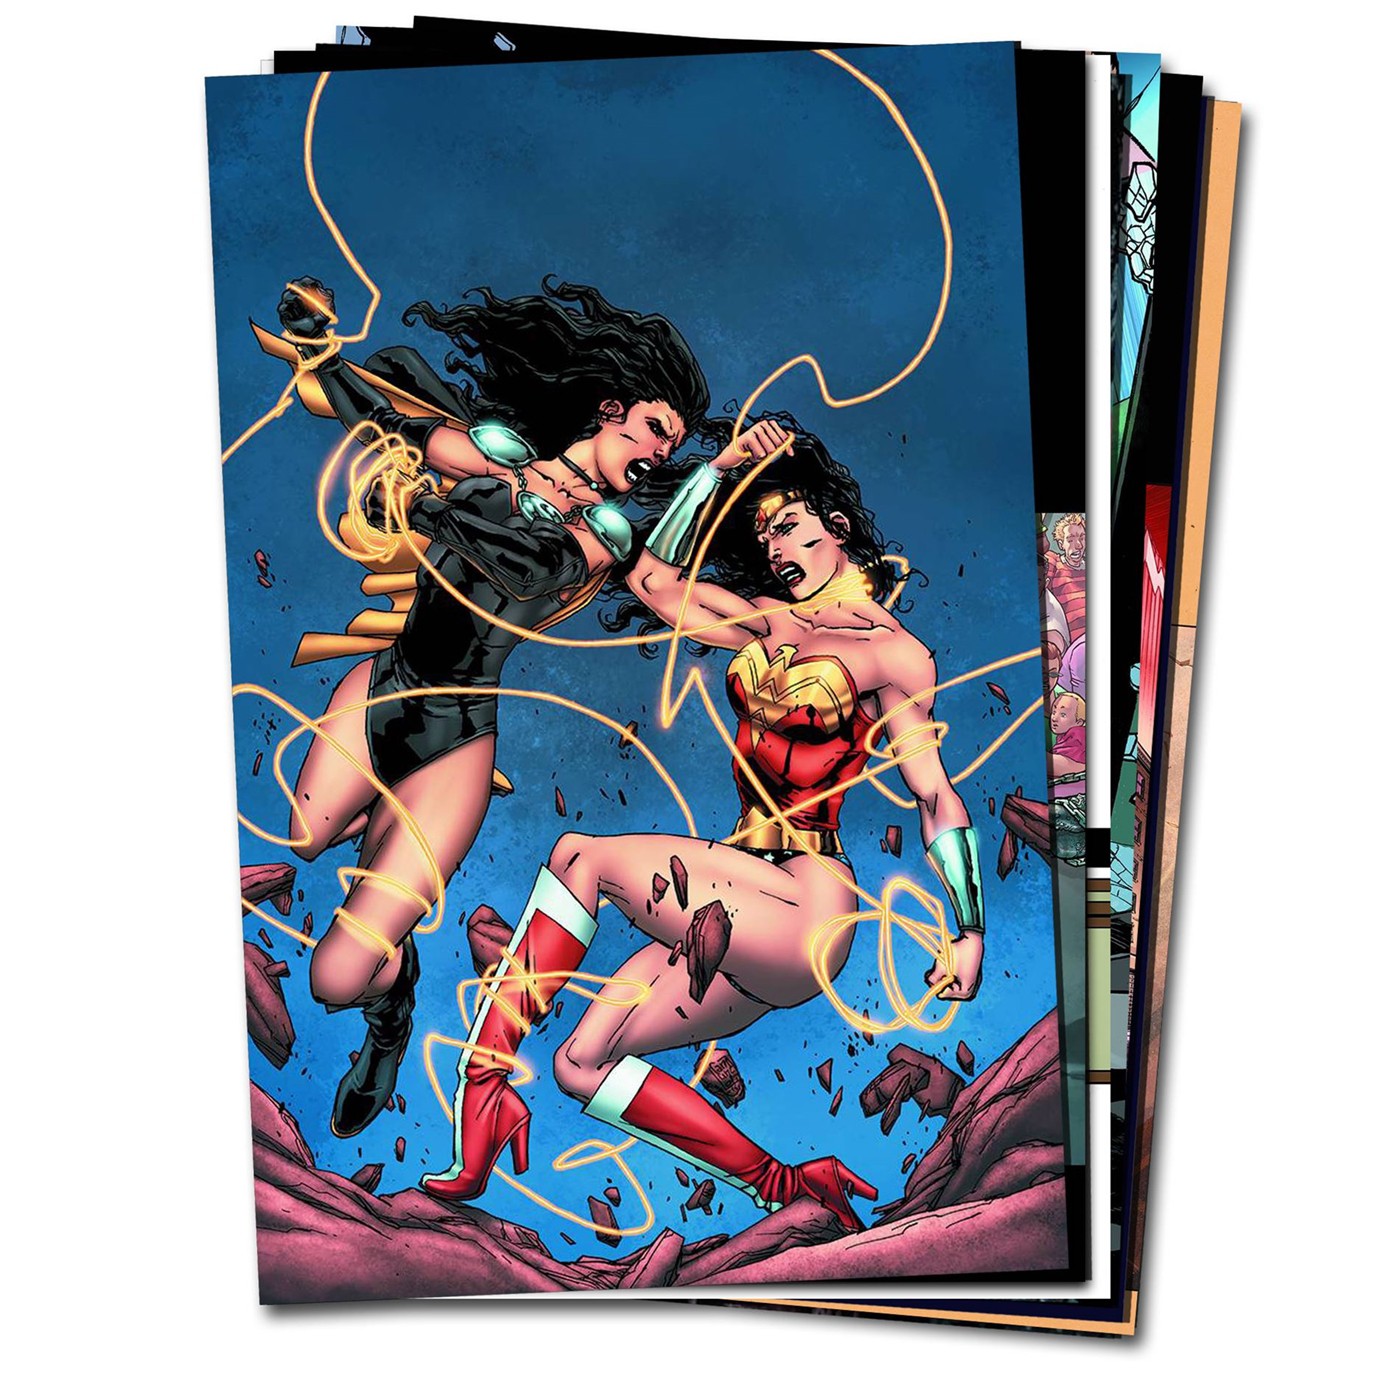 Wonder Woman Comic Book Binge Pack for August